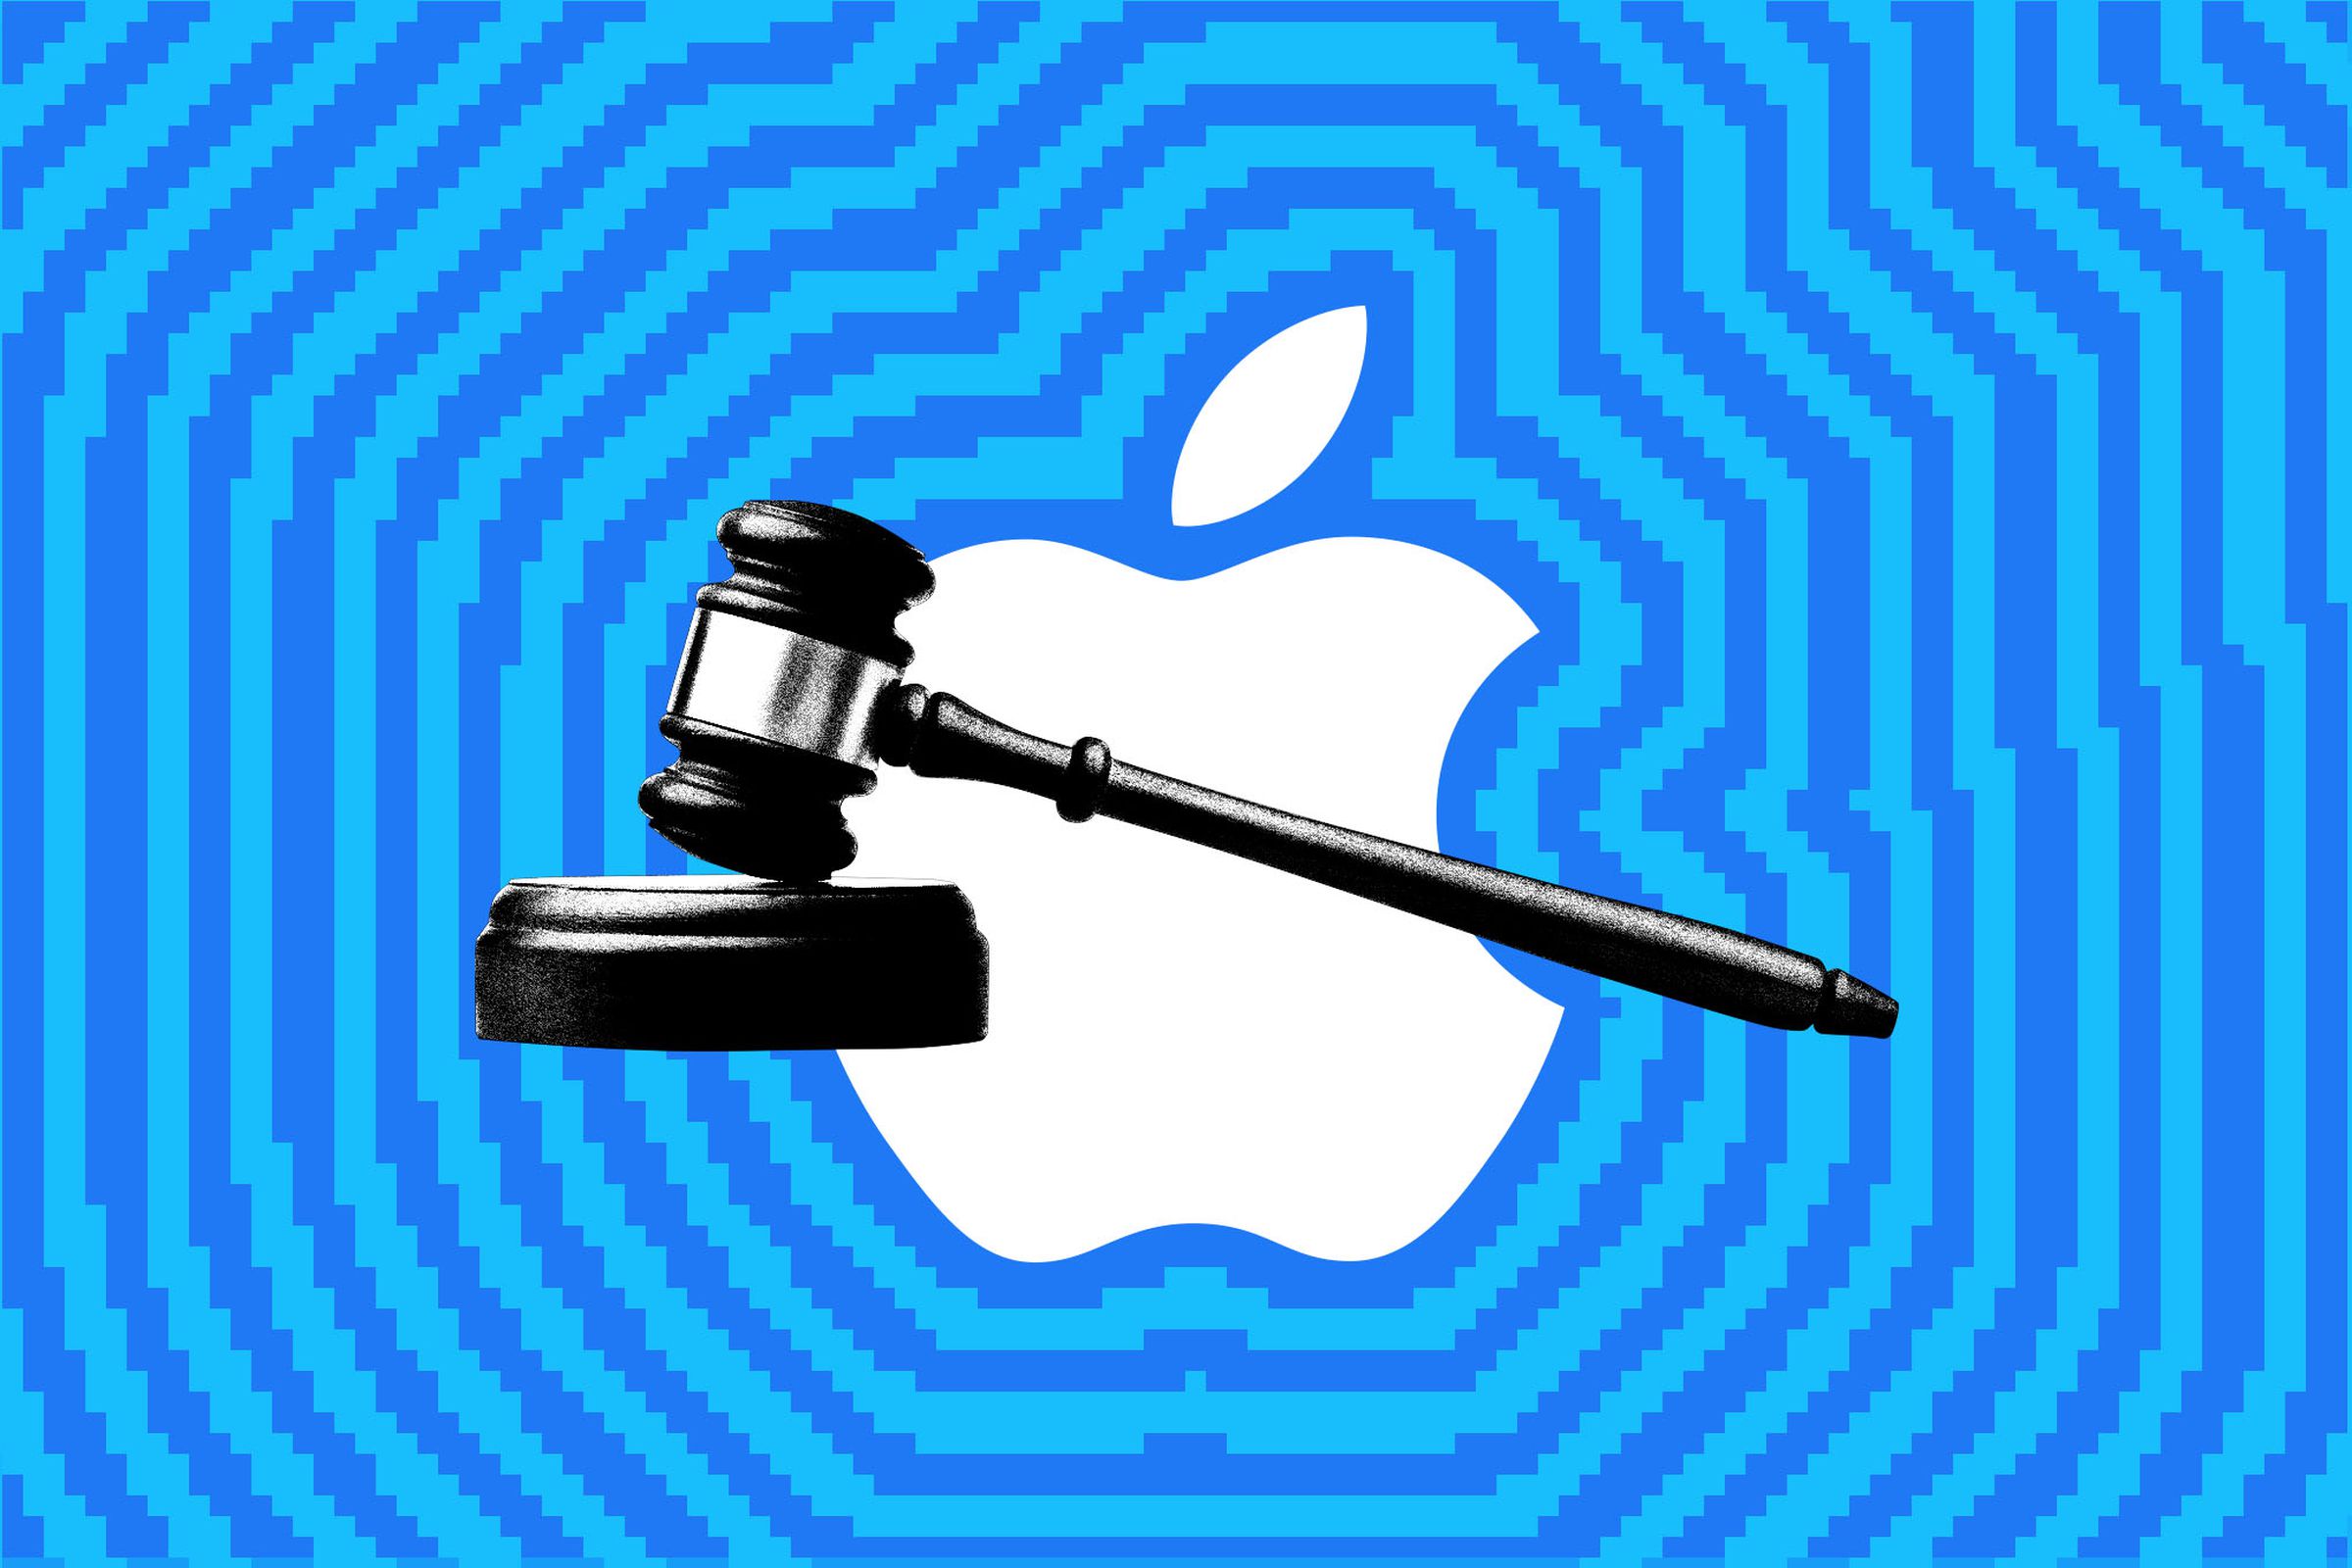 Illustration of the Apple logo behind a gavel.